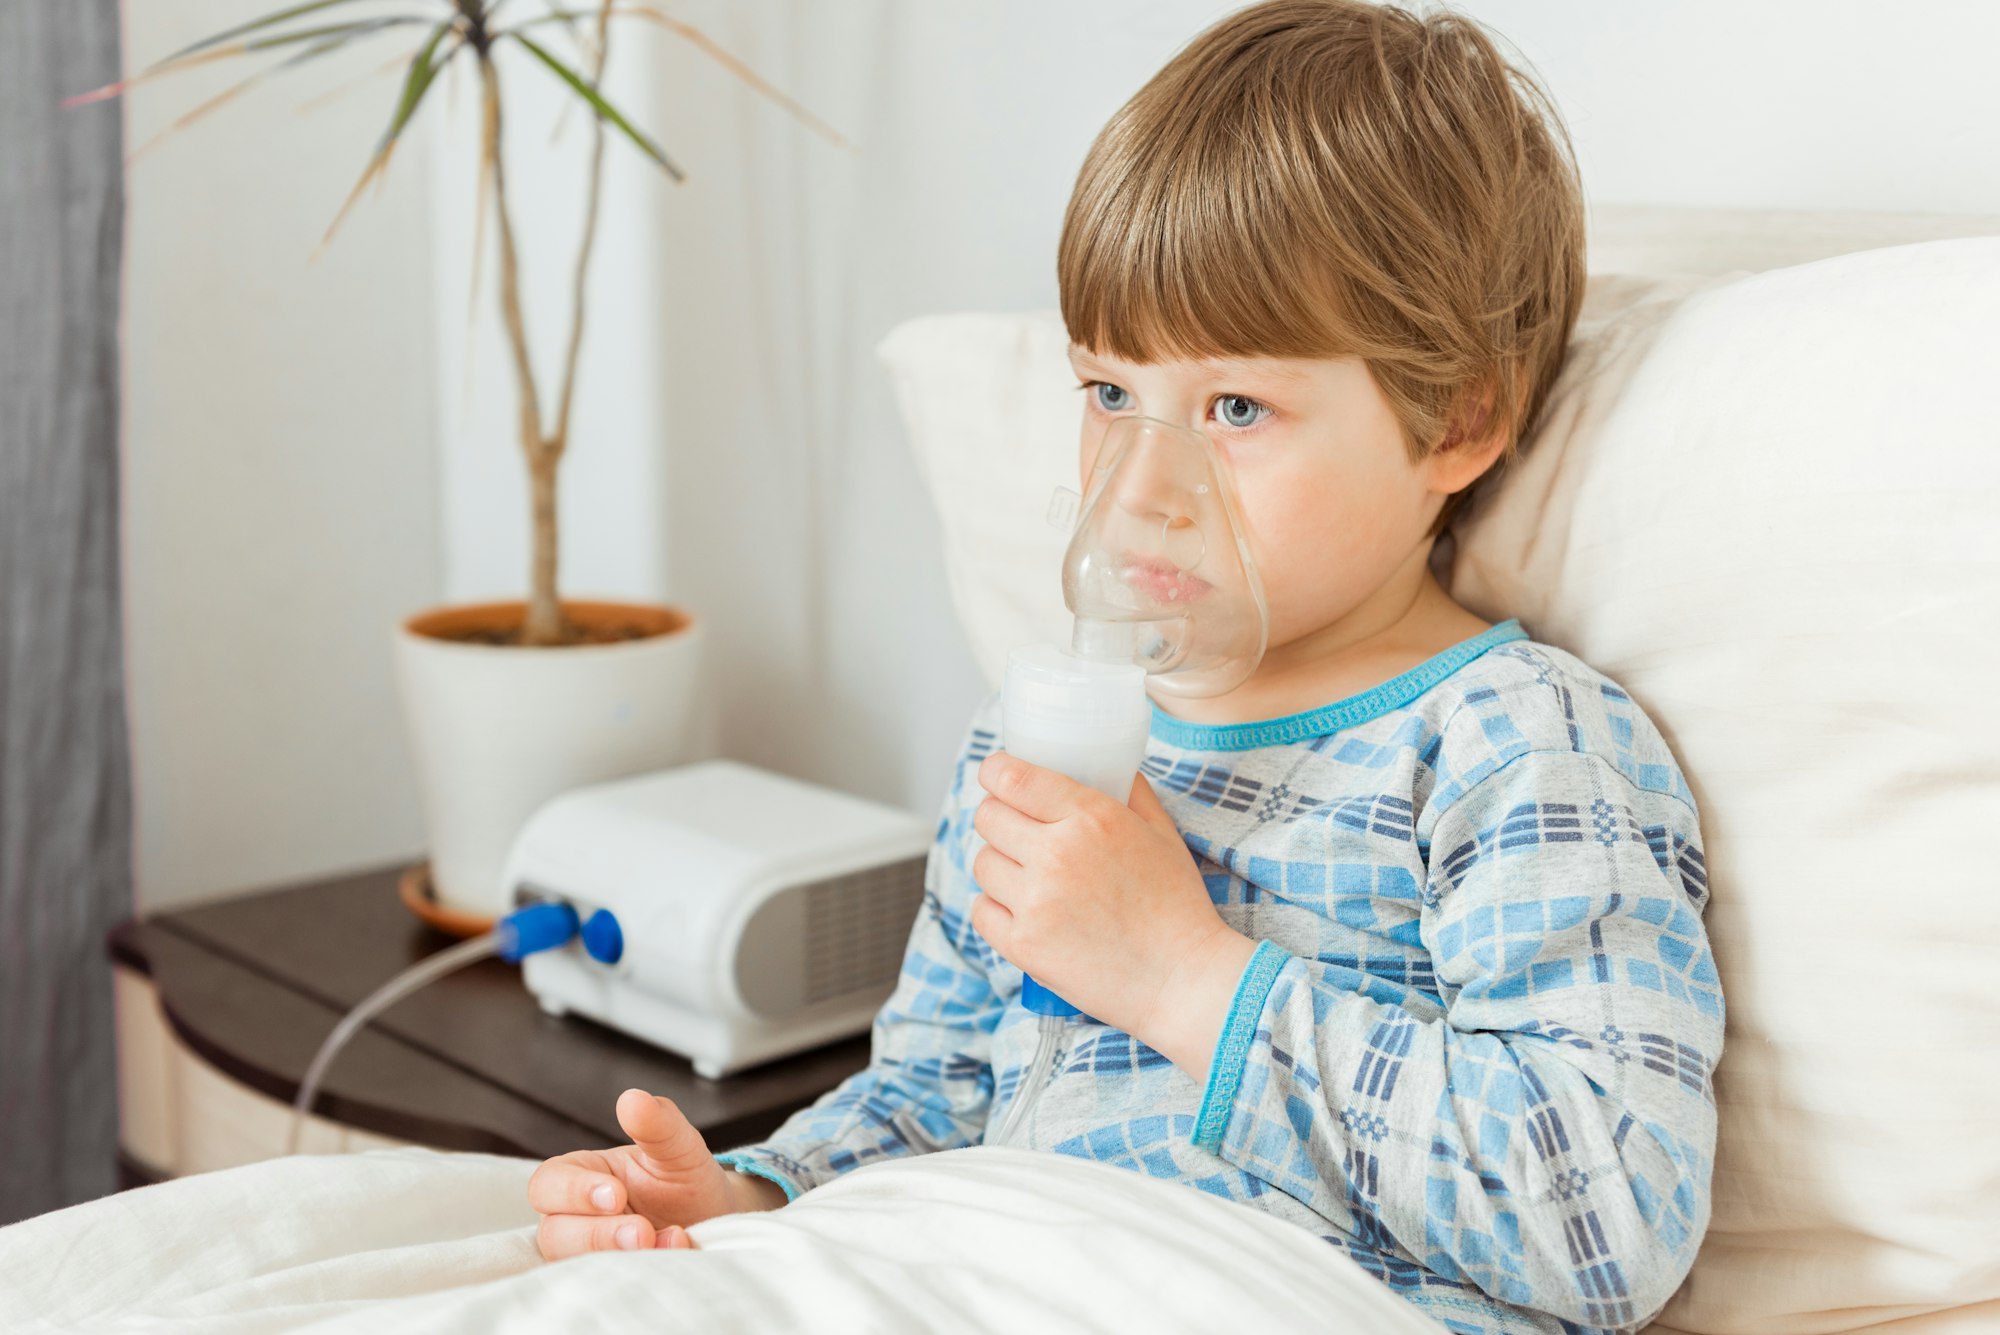 Boy with a respiratory syncytial virus, inhaling medication through an inhalation mask. Flu